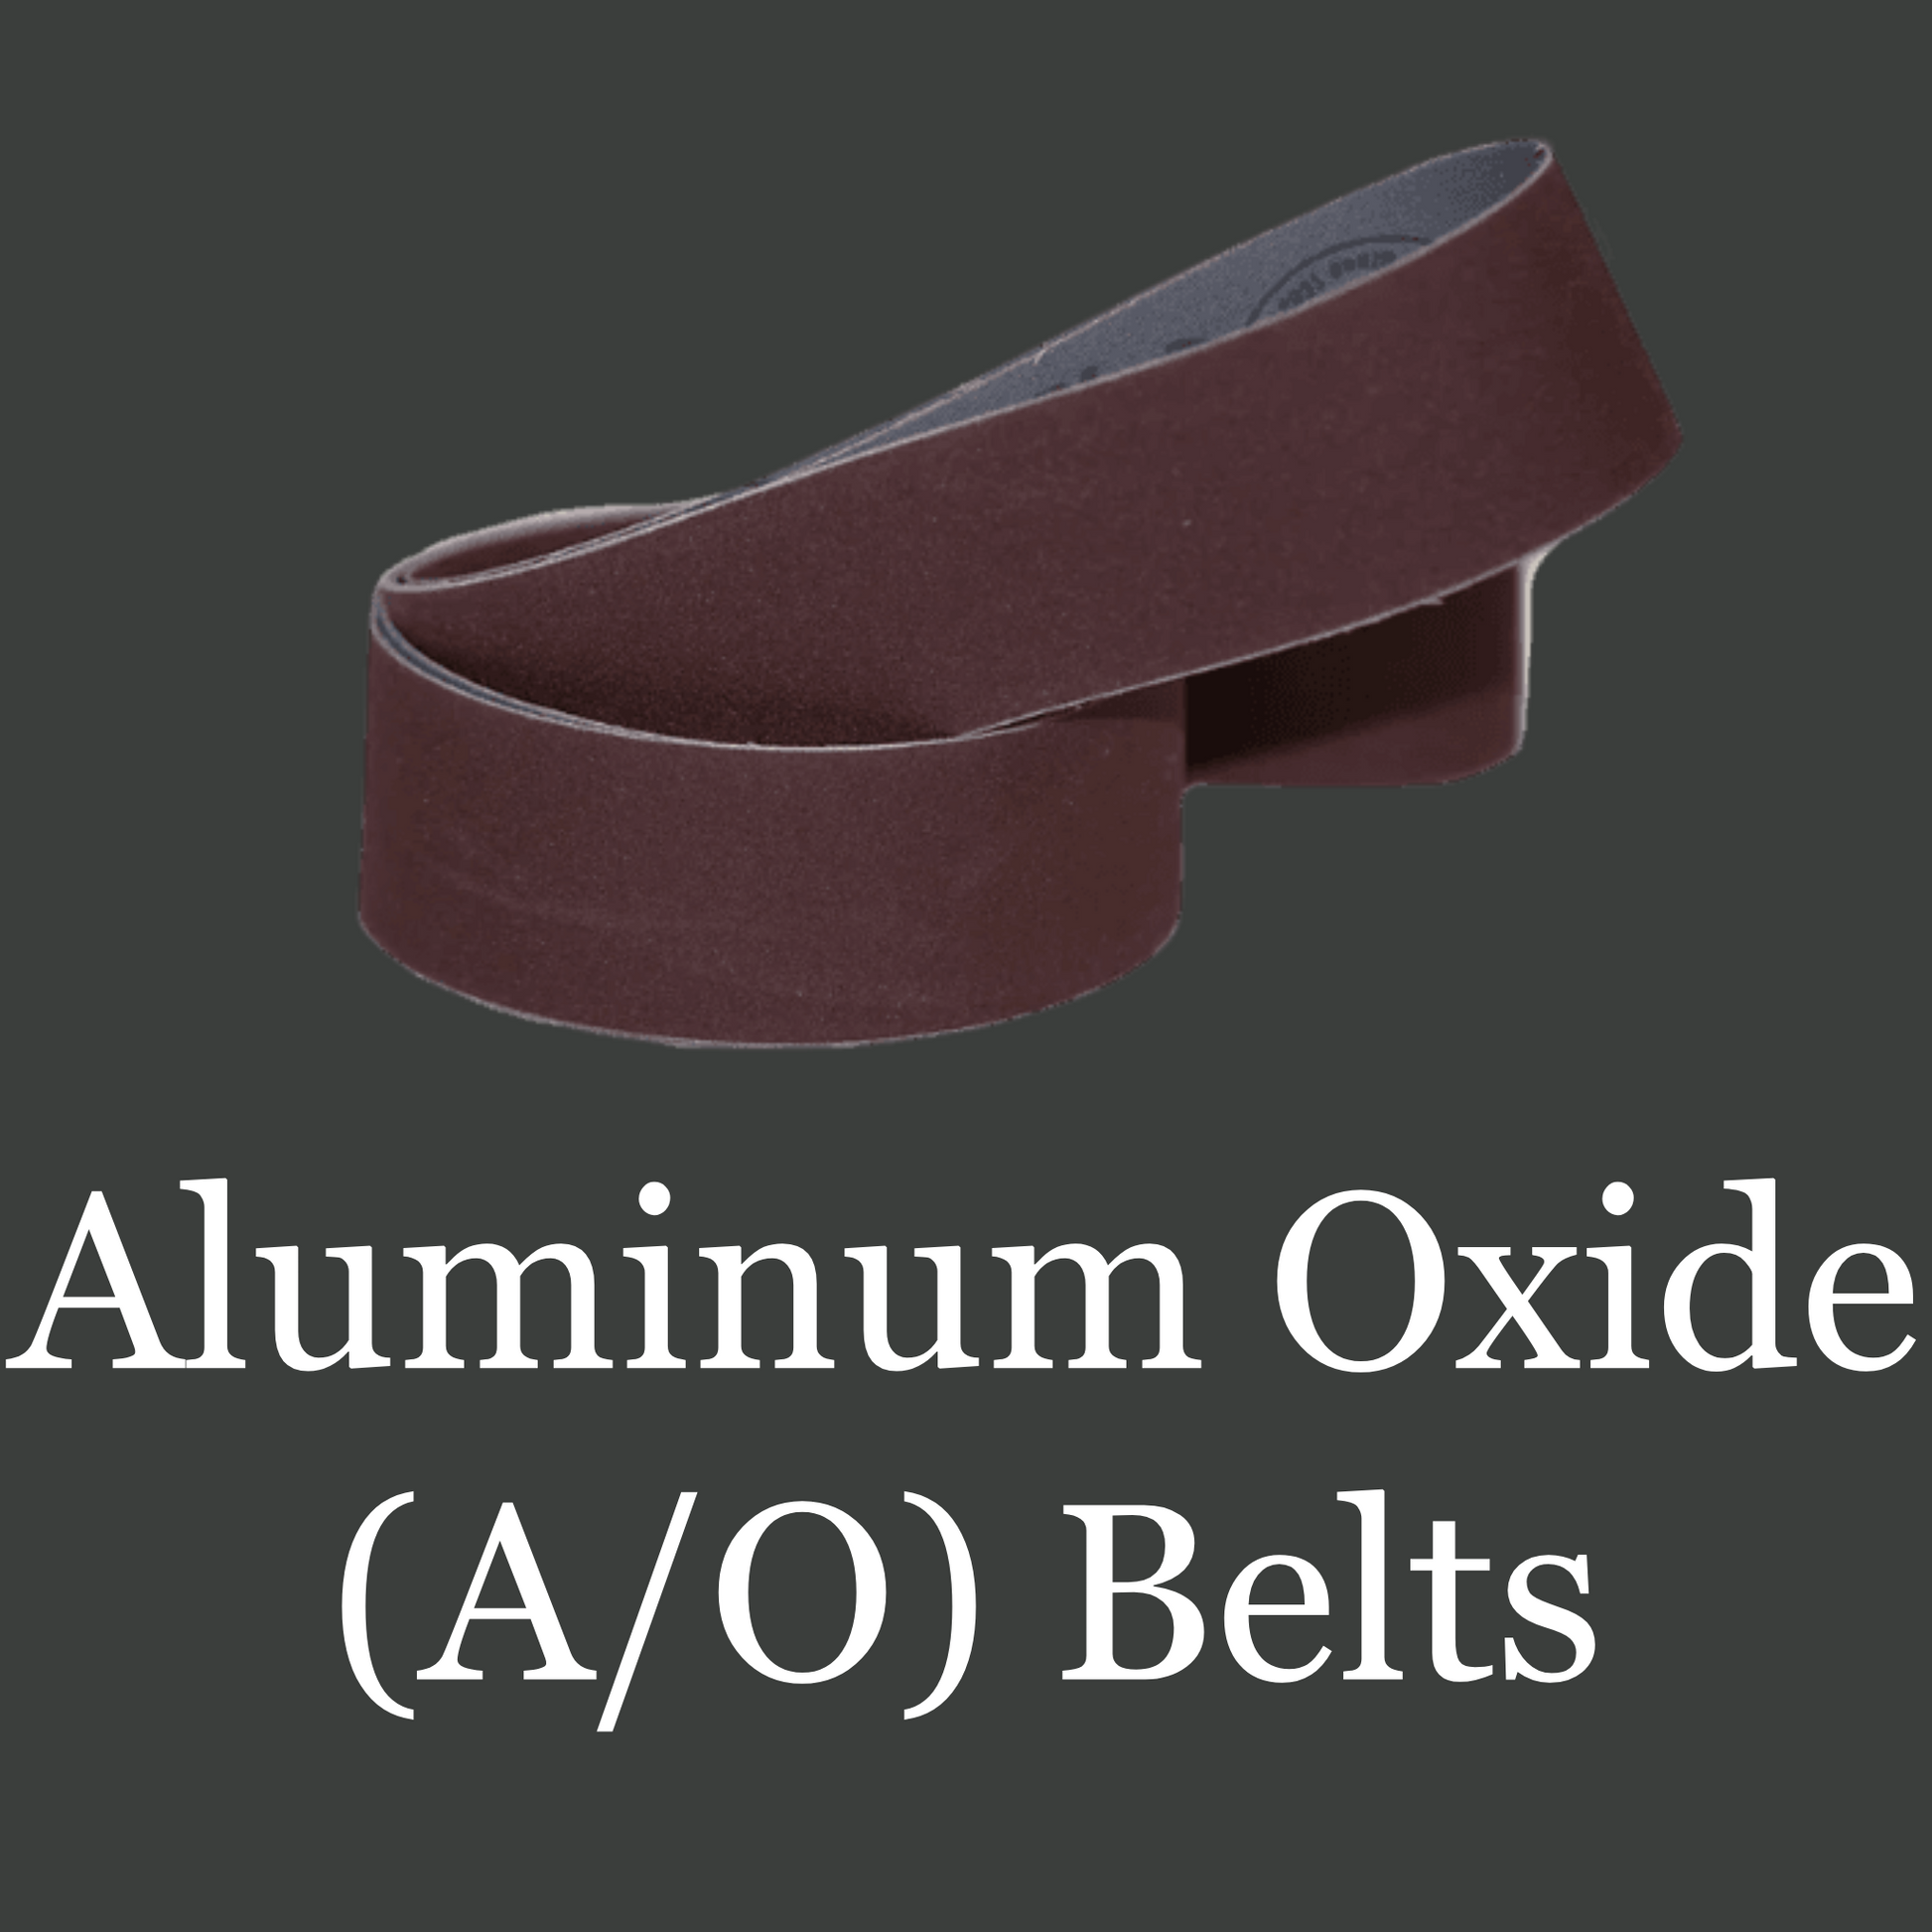 Aluminum Oxide 2” x 36” X Belt